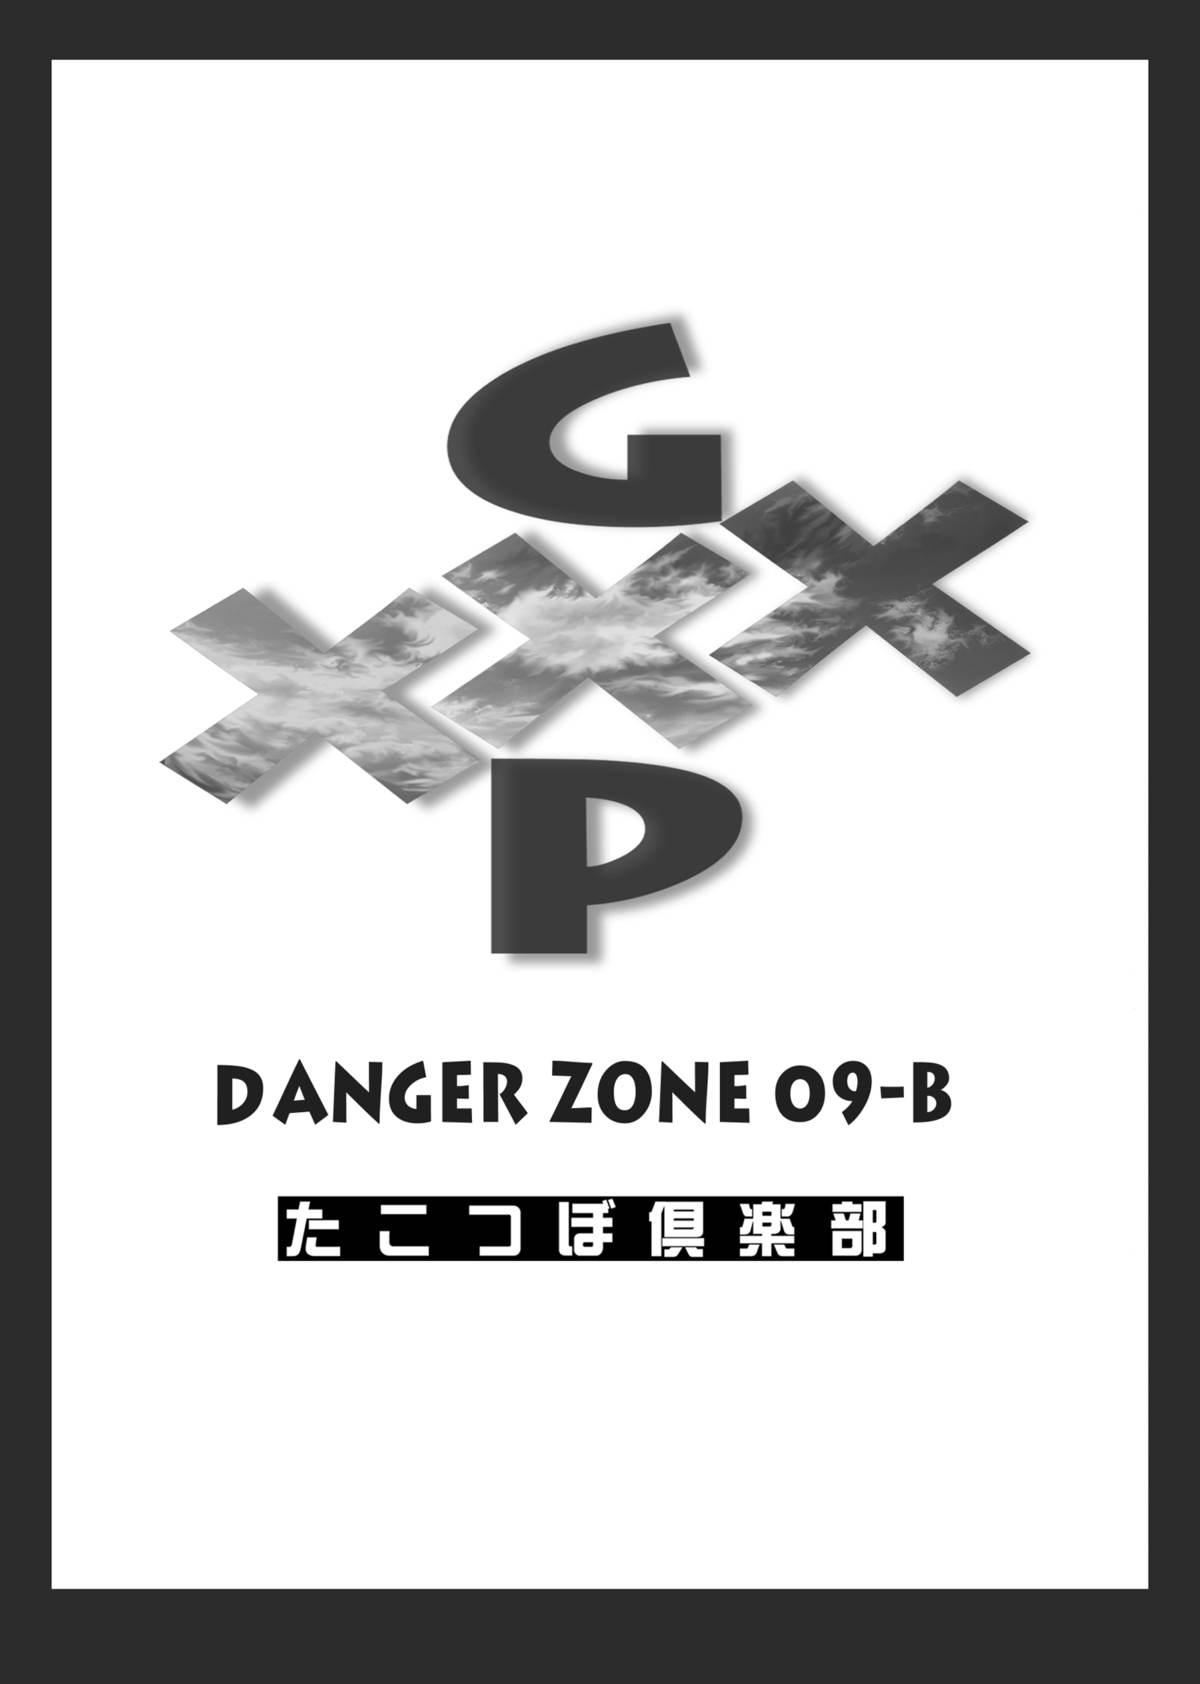 DL-DangerZone05 52